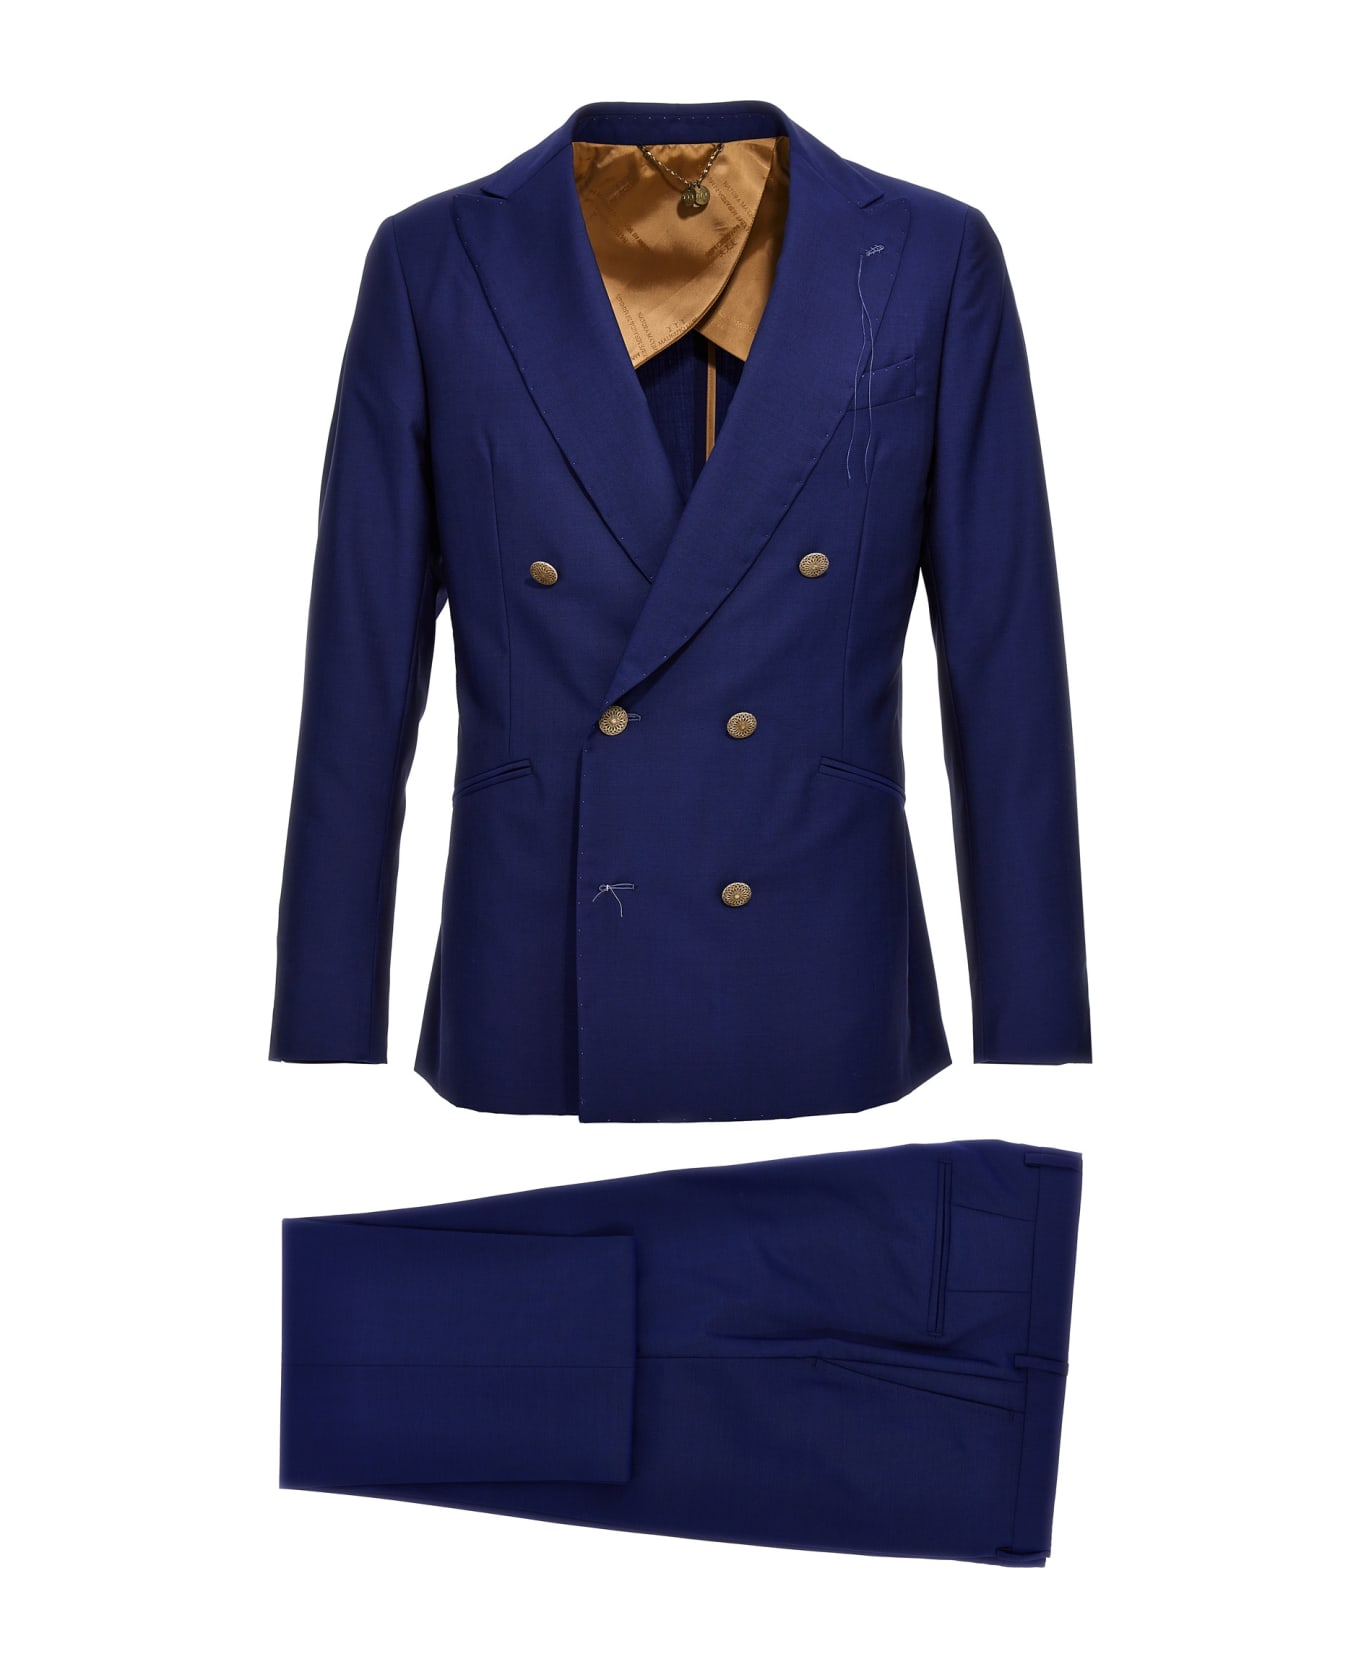 Maurizio Miri 'sam Arold' Suit - Blue